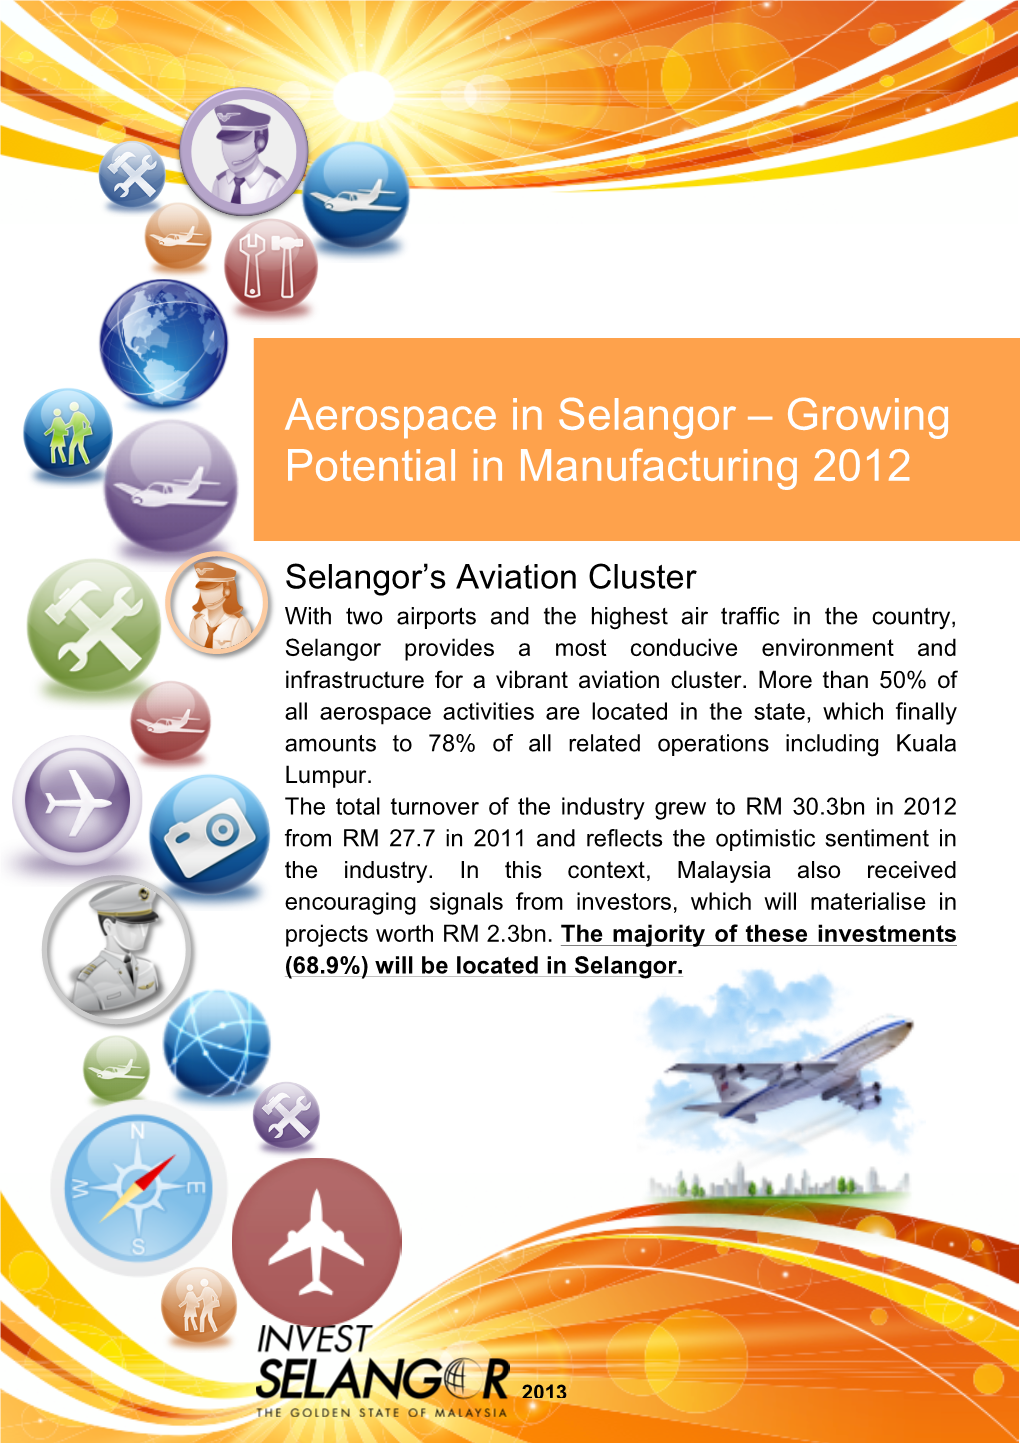 Aerospace in Selangor – Growing Potential in Manufacturing 2012